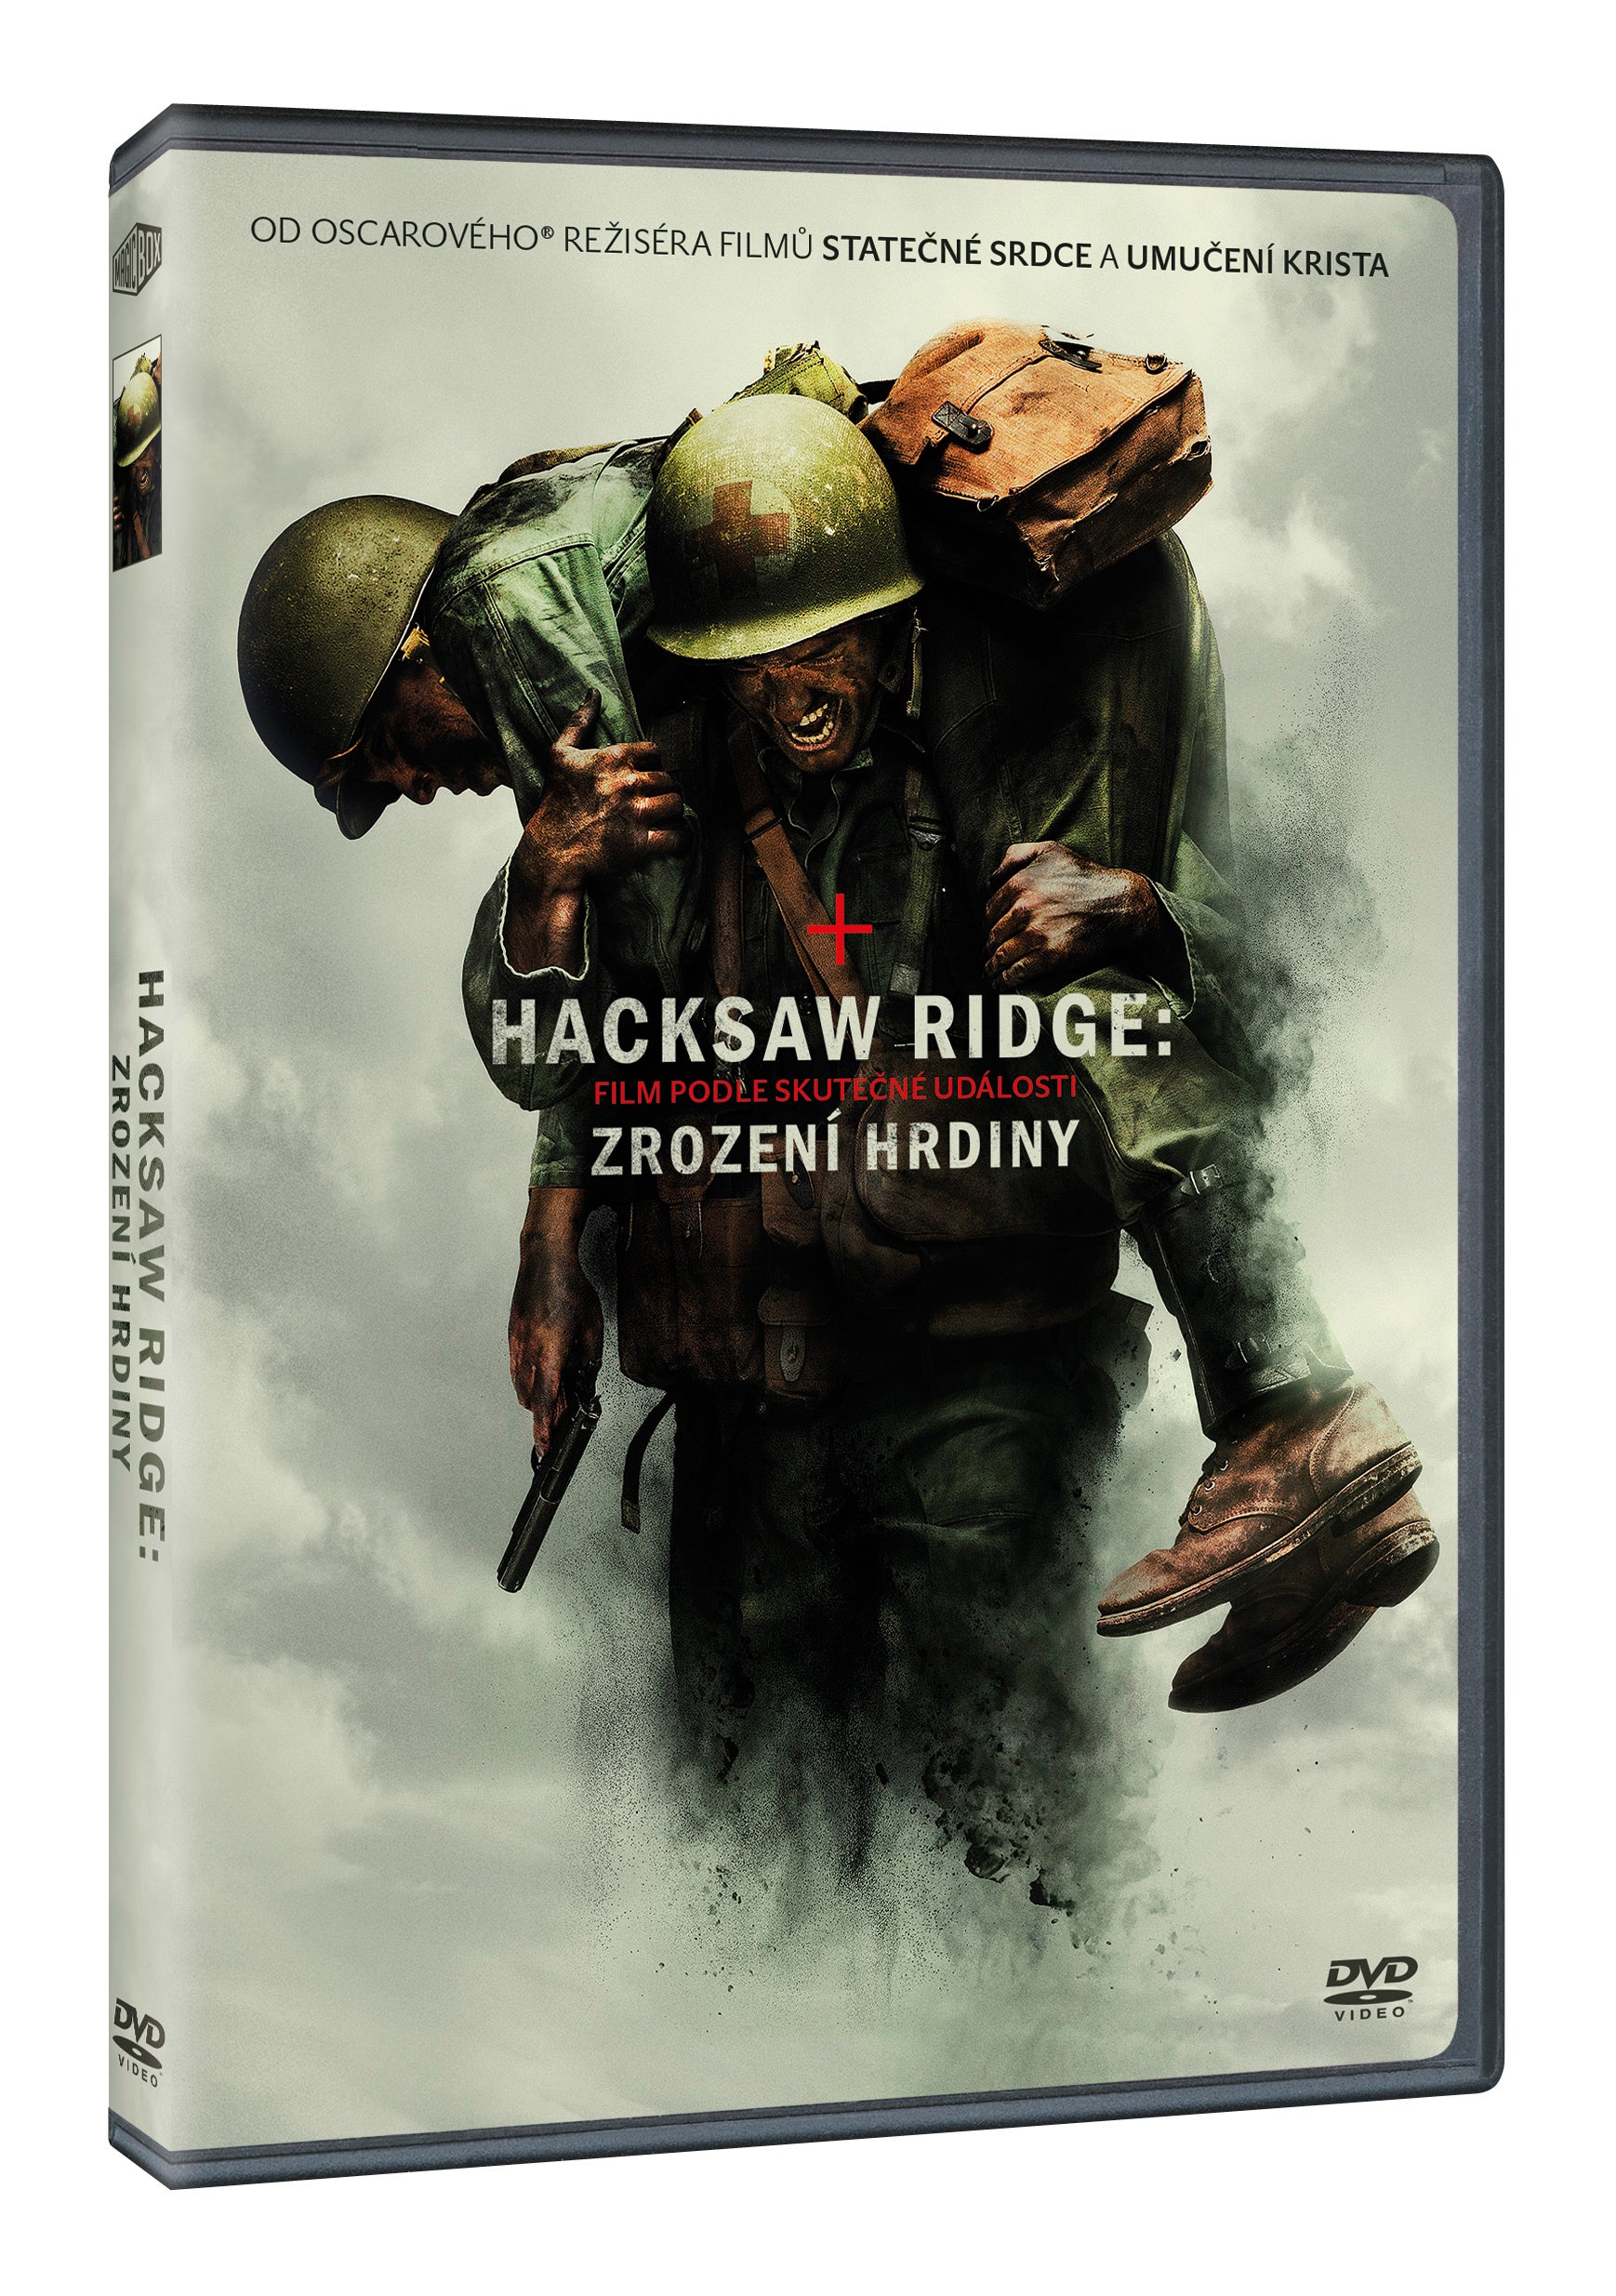 Hacksaw Ridge: Zrozeni hrdiny DVD / Hacksaw Ridge